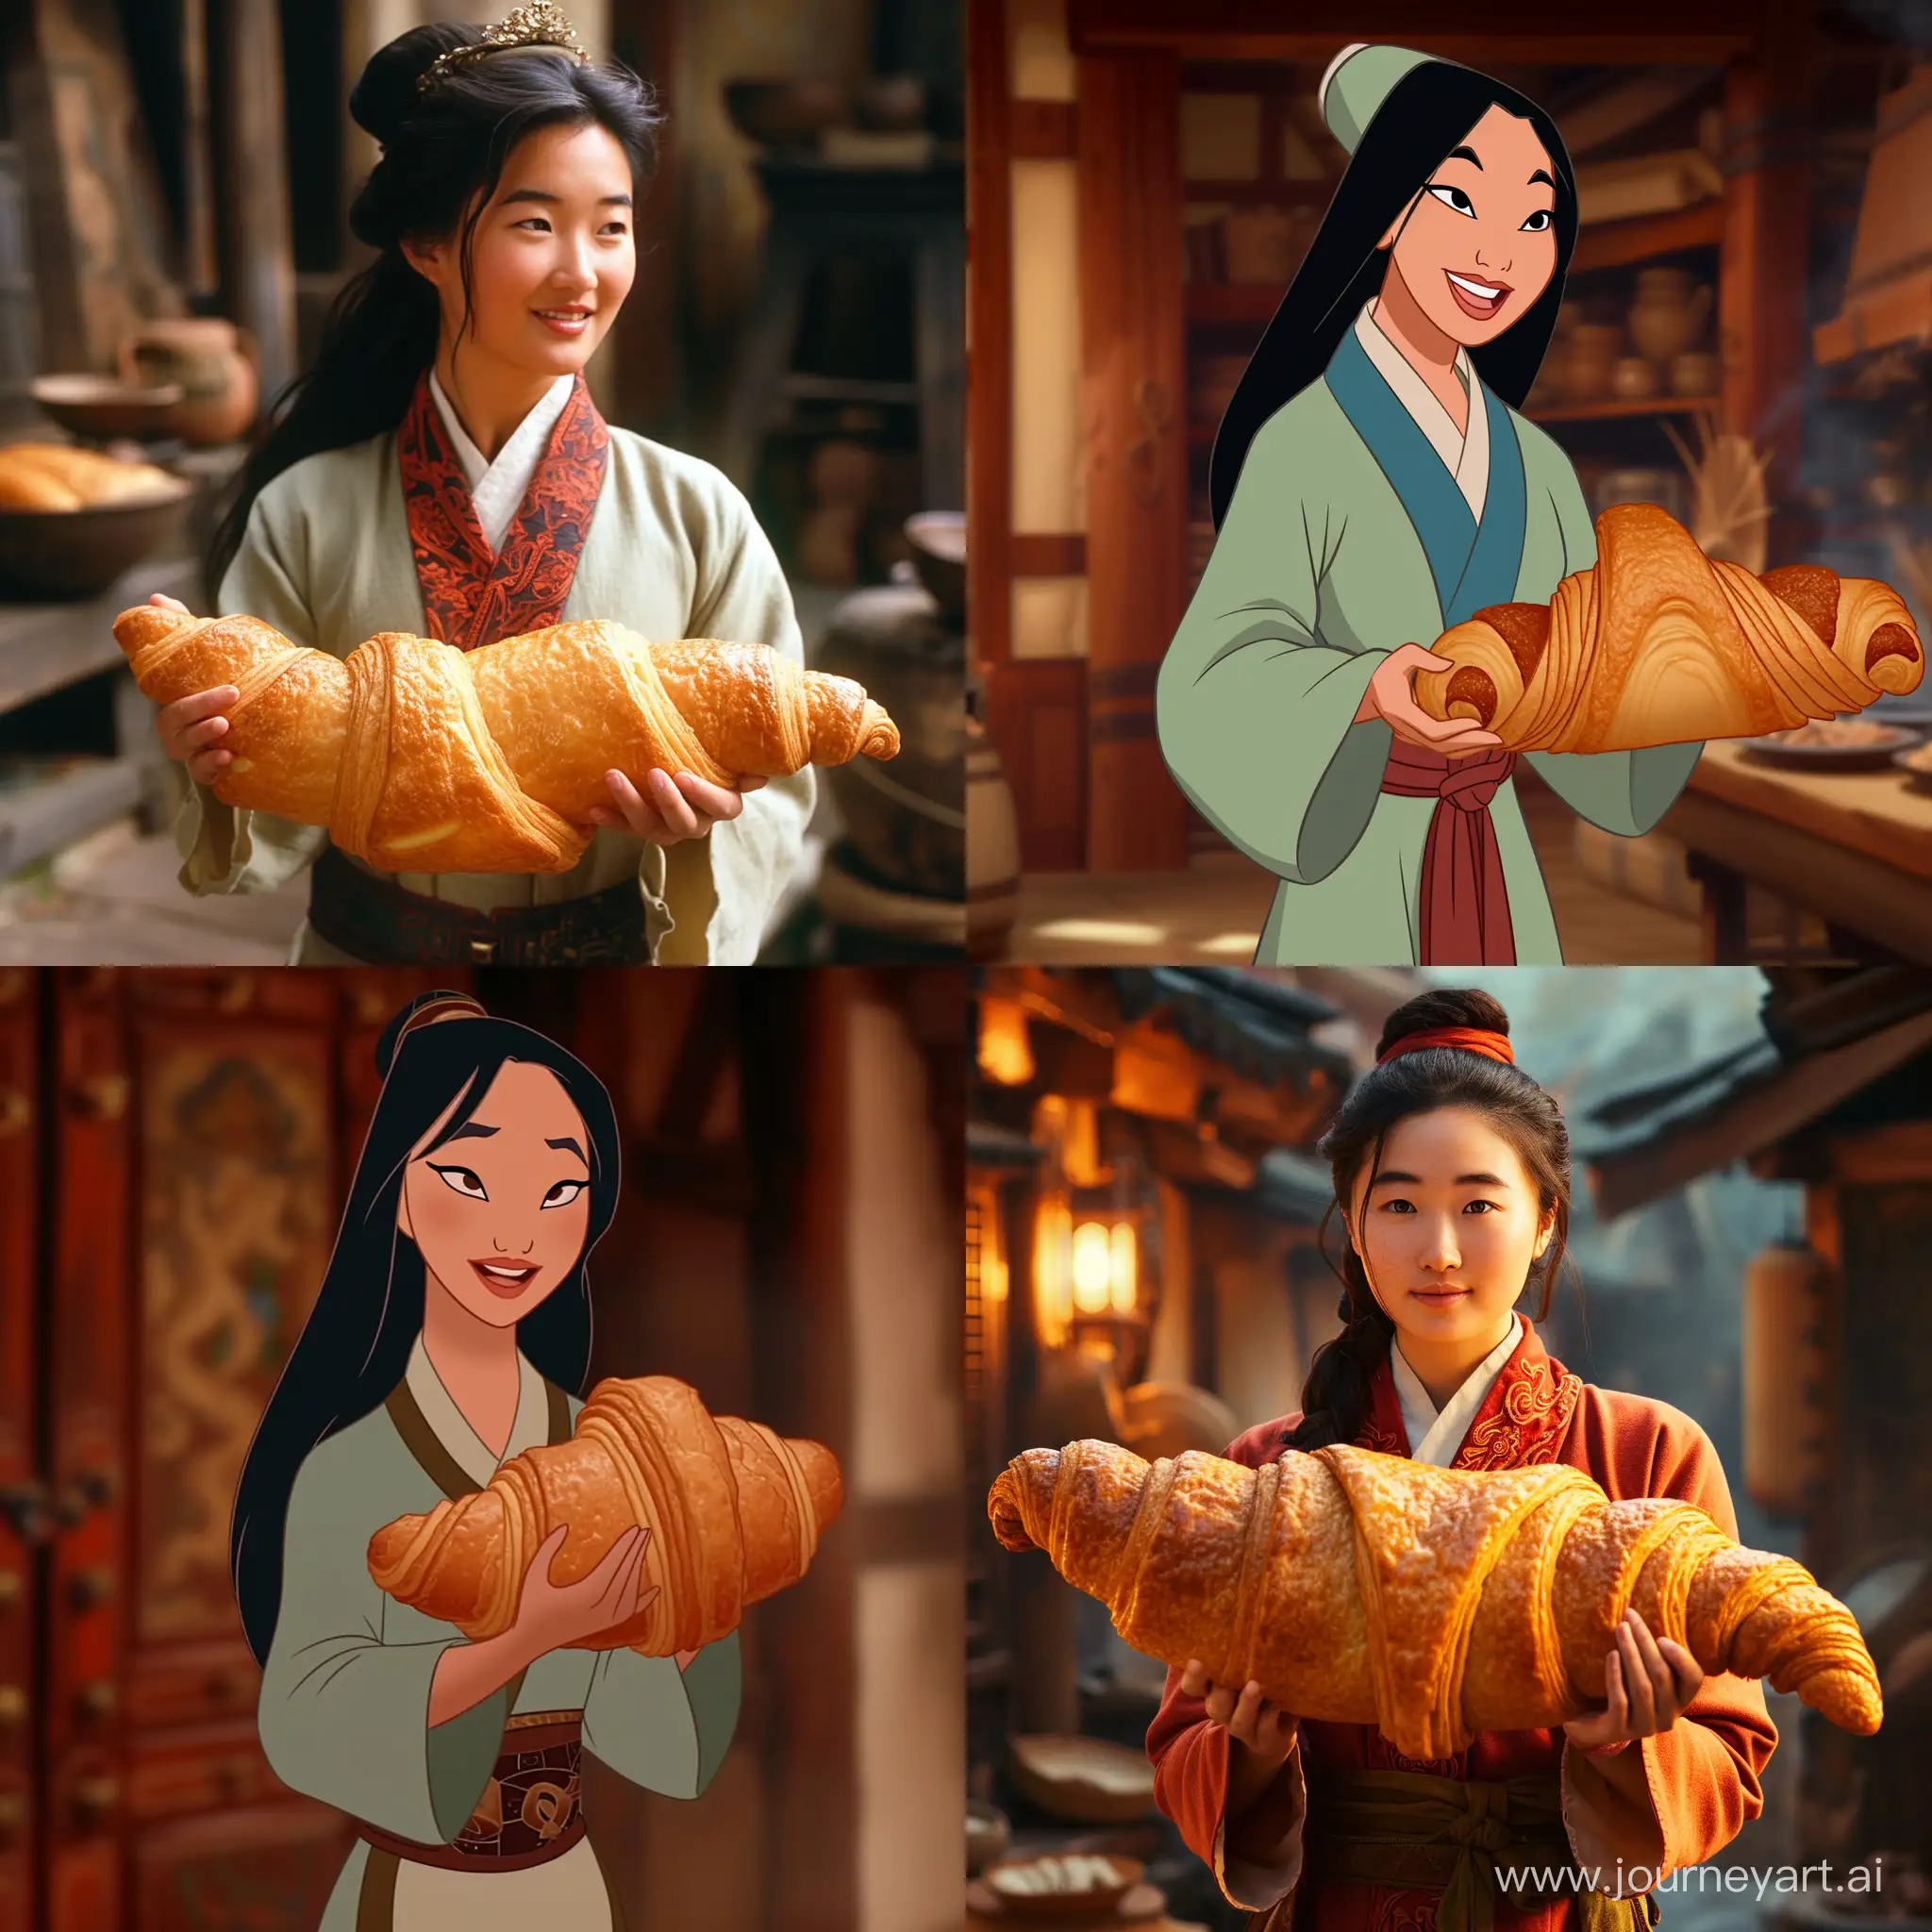 Mulan won the croissant Disney style